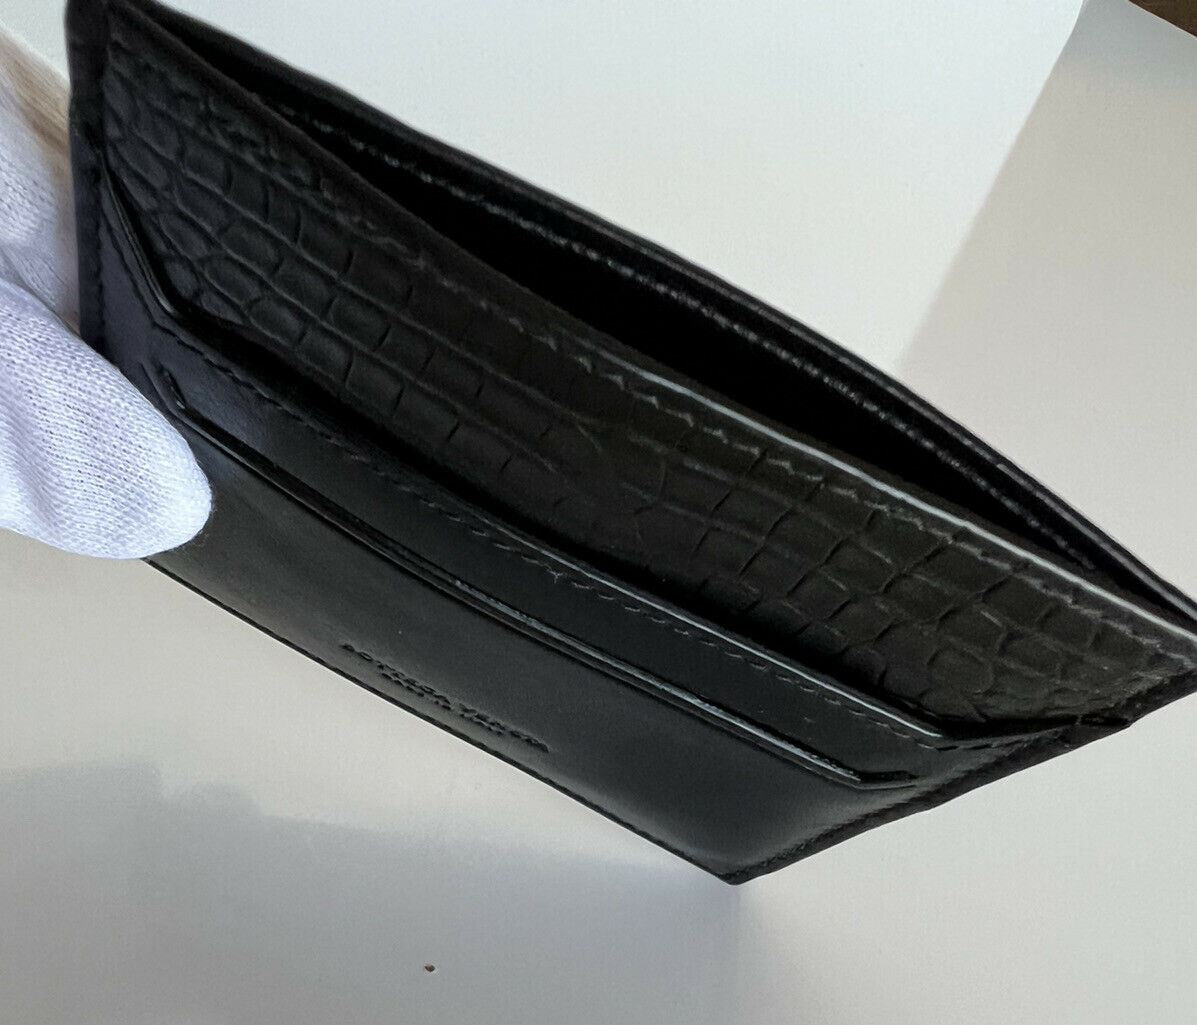 NWT $490 Bottega Veneta Men's Leather & Alligator Card Case Black 581060 Italy